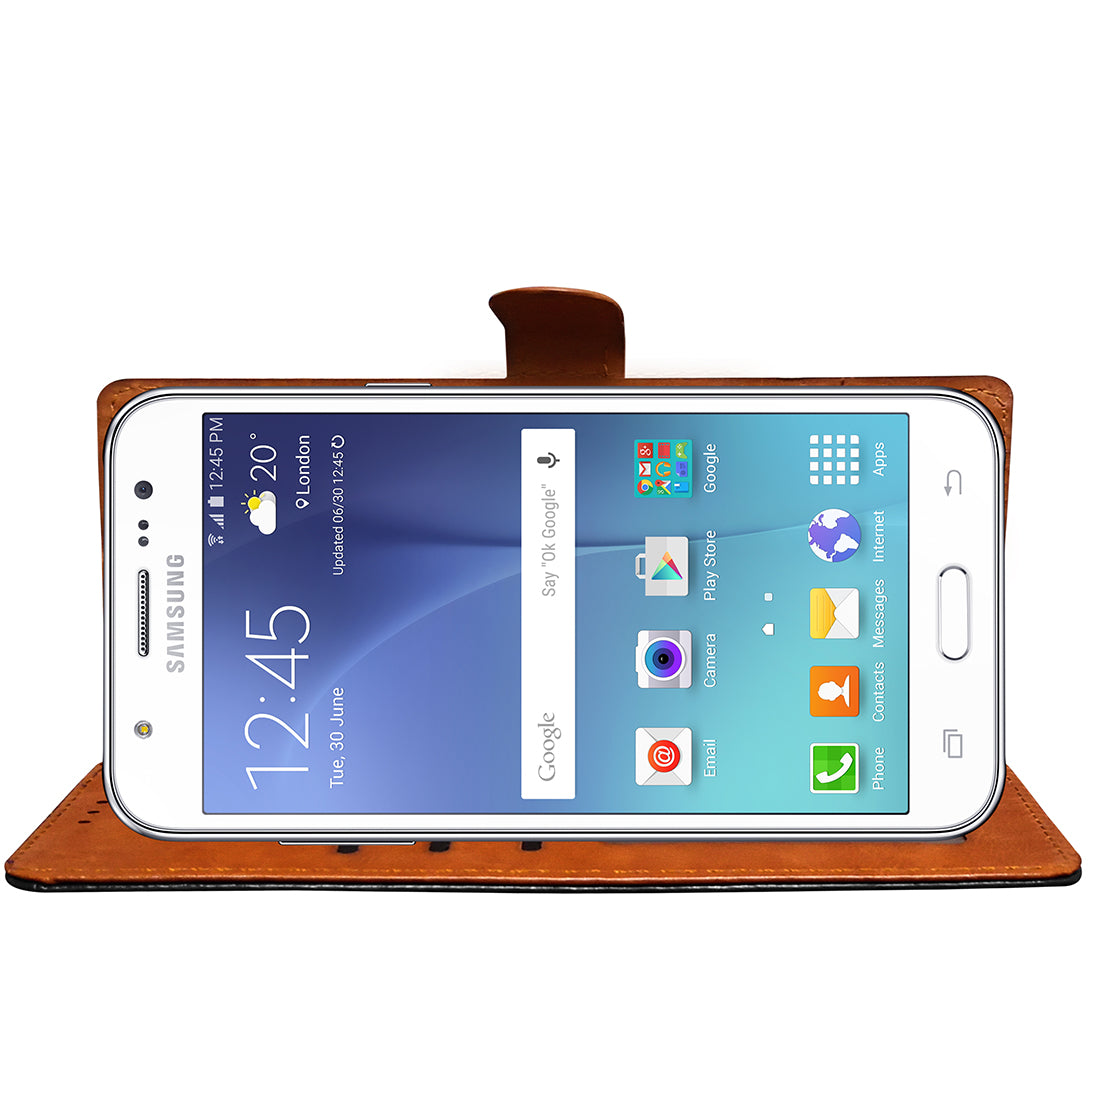 Premium Wallet Flip Cover for Samsung Galaxy J5